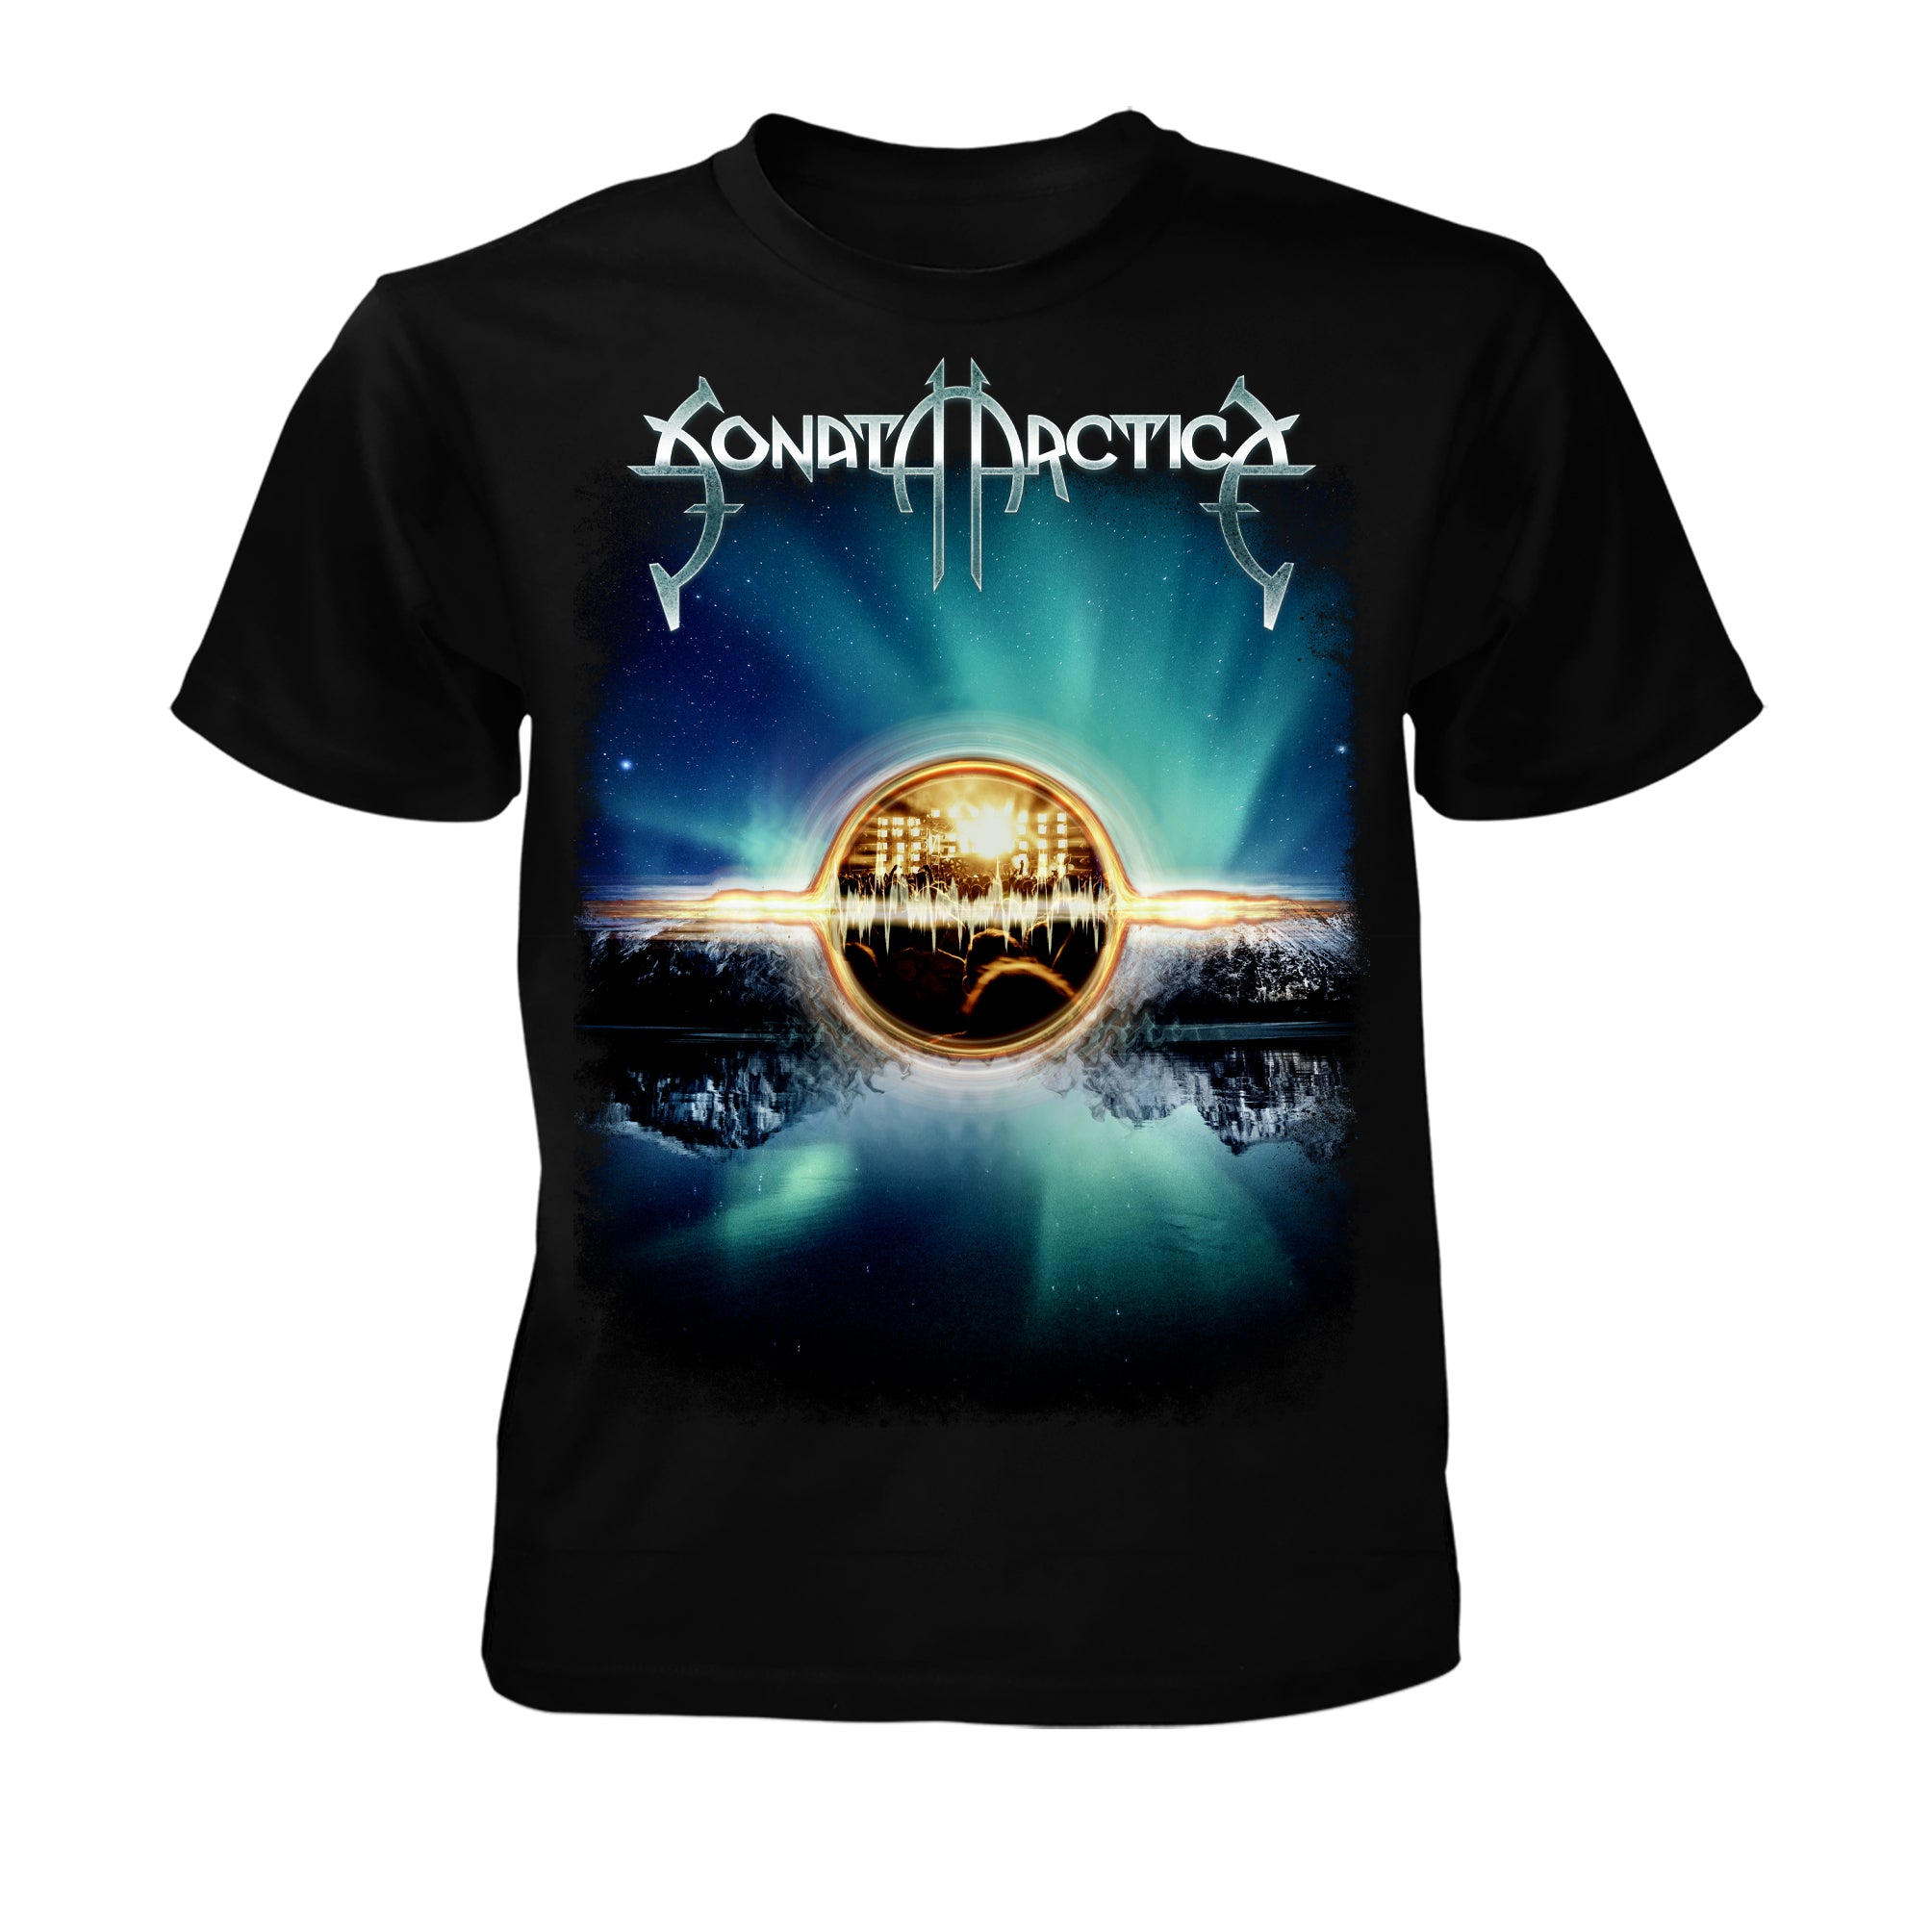 Arctic Storm Finland Tour 2023 T-shirt